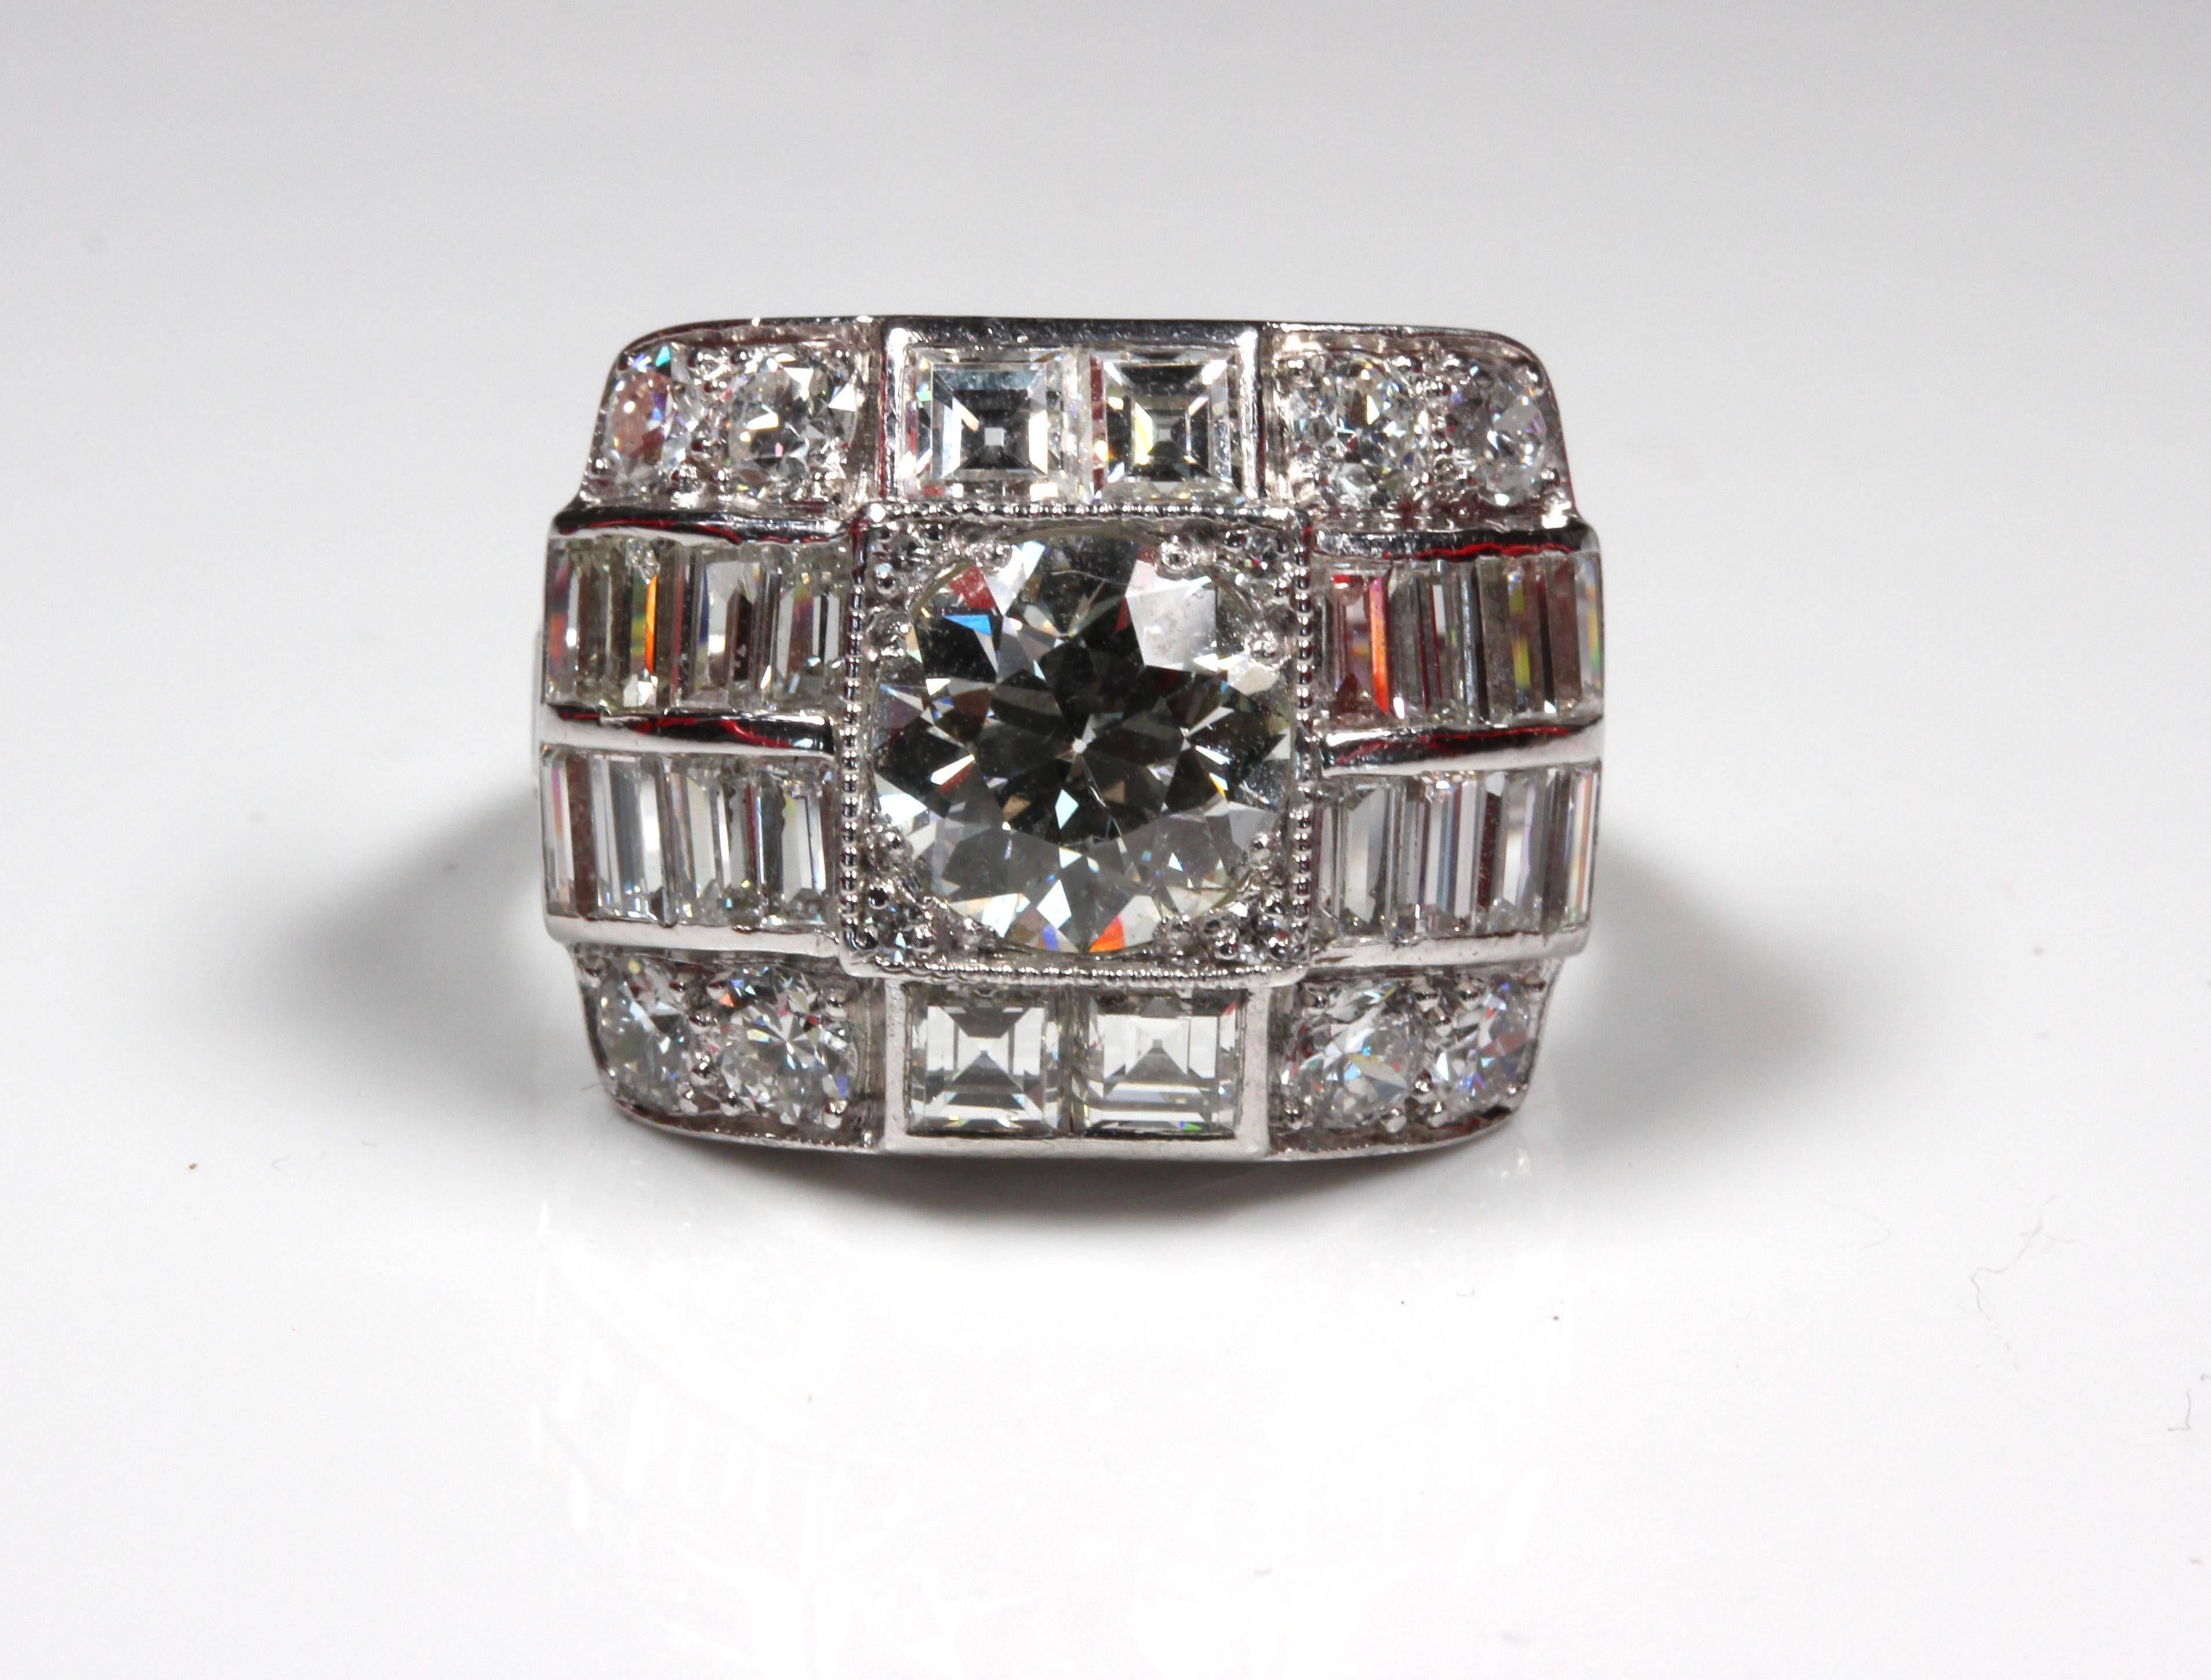 Magnificent Art Deco Diamond Ring, centre diamond estimated 1.78 carat, cut early modern brilliant, L, VS2, grain set, surrounded by asscher, baguette and early modern brilliant cut diamonds bringing total to 5.82 carat, domed design, filigree